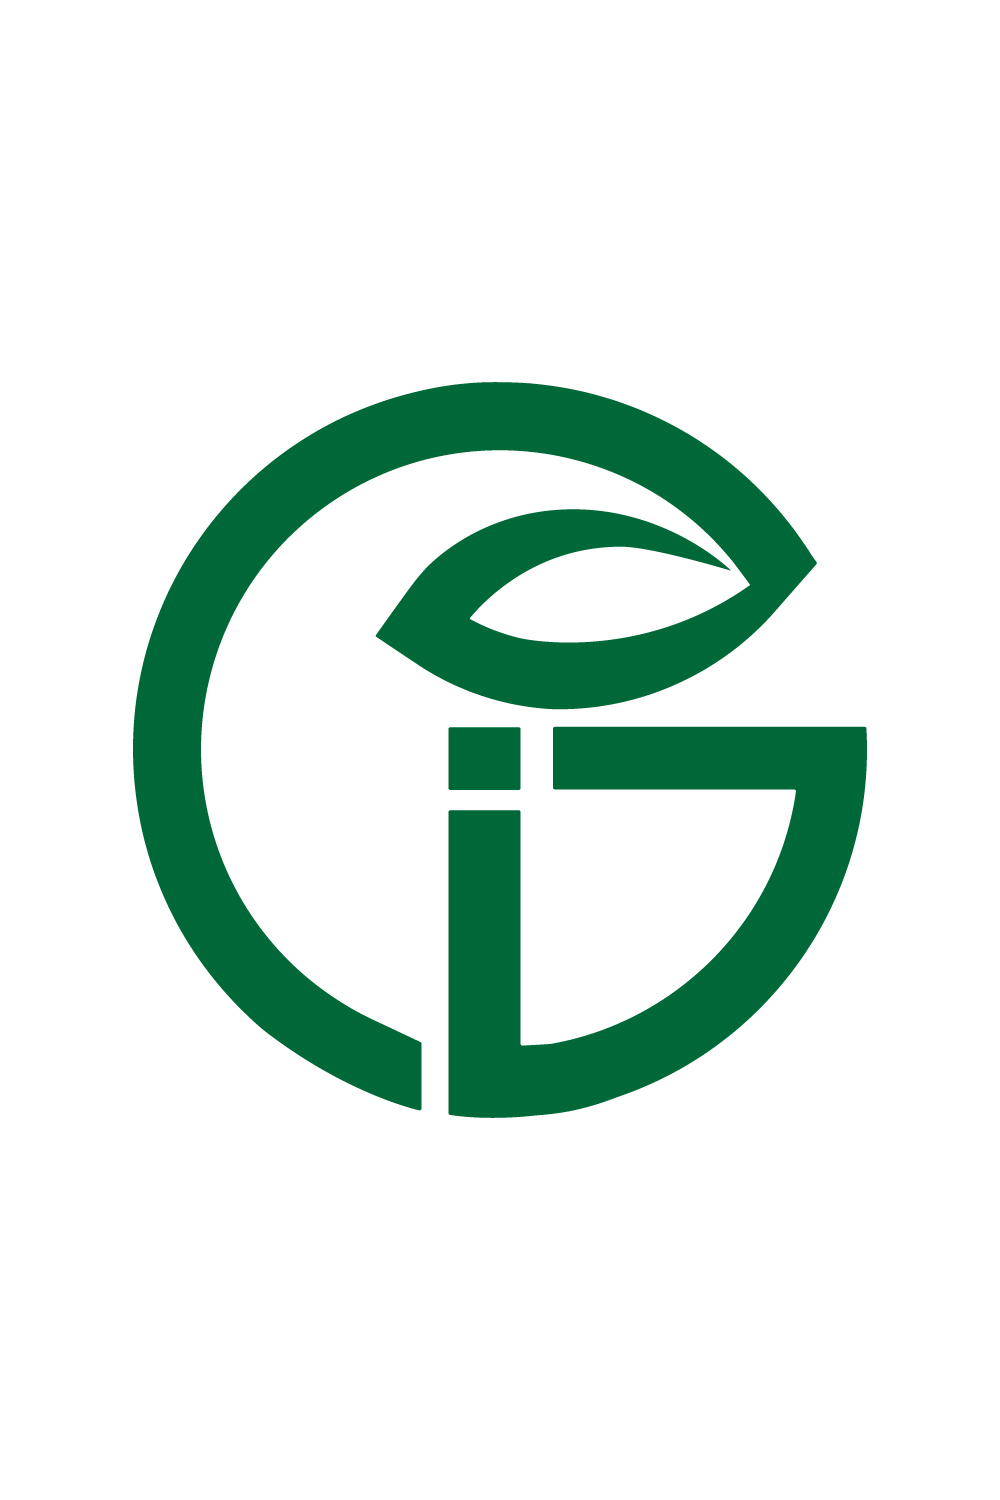 Initials GI letters logo design vector images GI Green Leaf logo design GI logo best icon template illustration Leaf best icon design pinterest preview image.